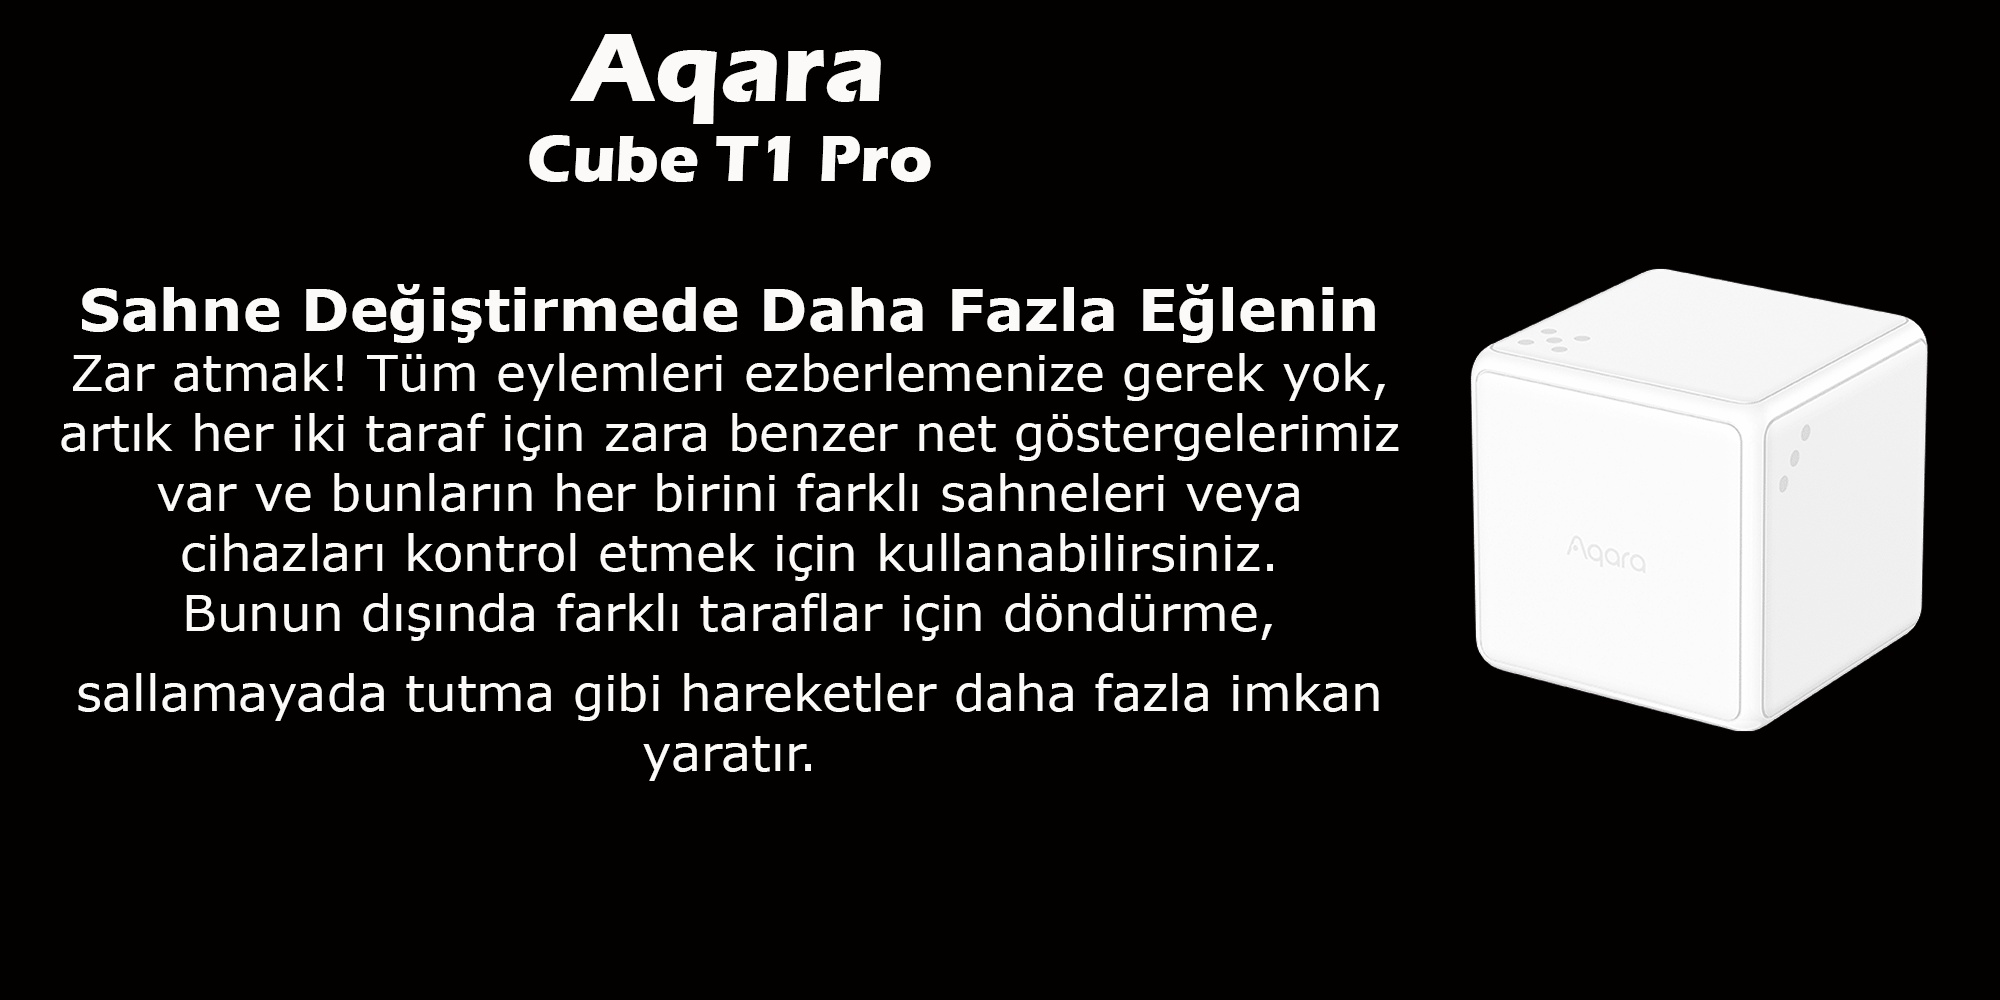 aqara cube t1 pro